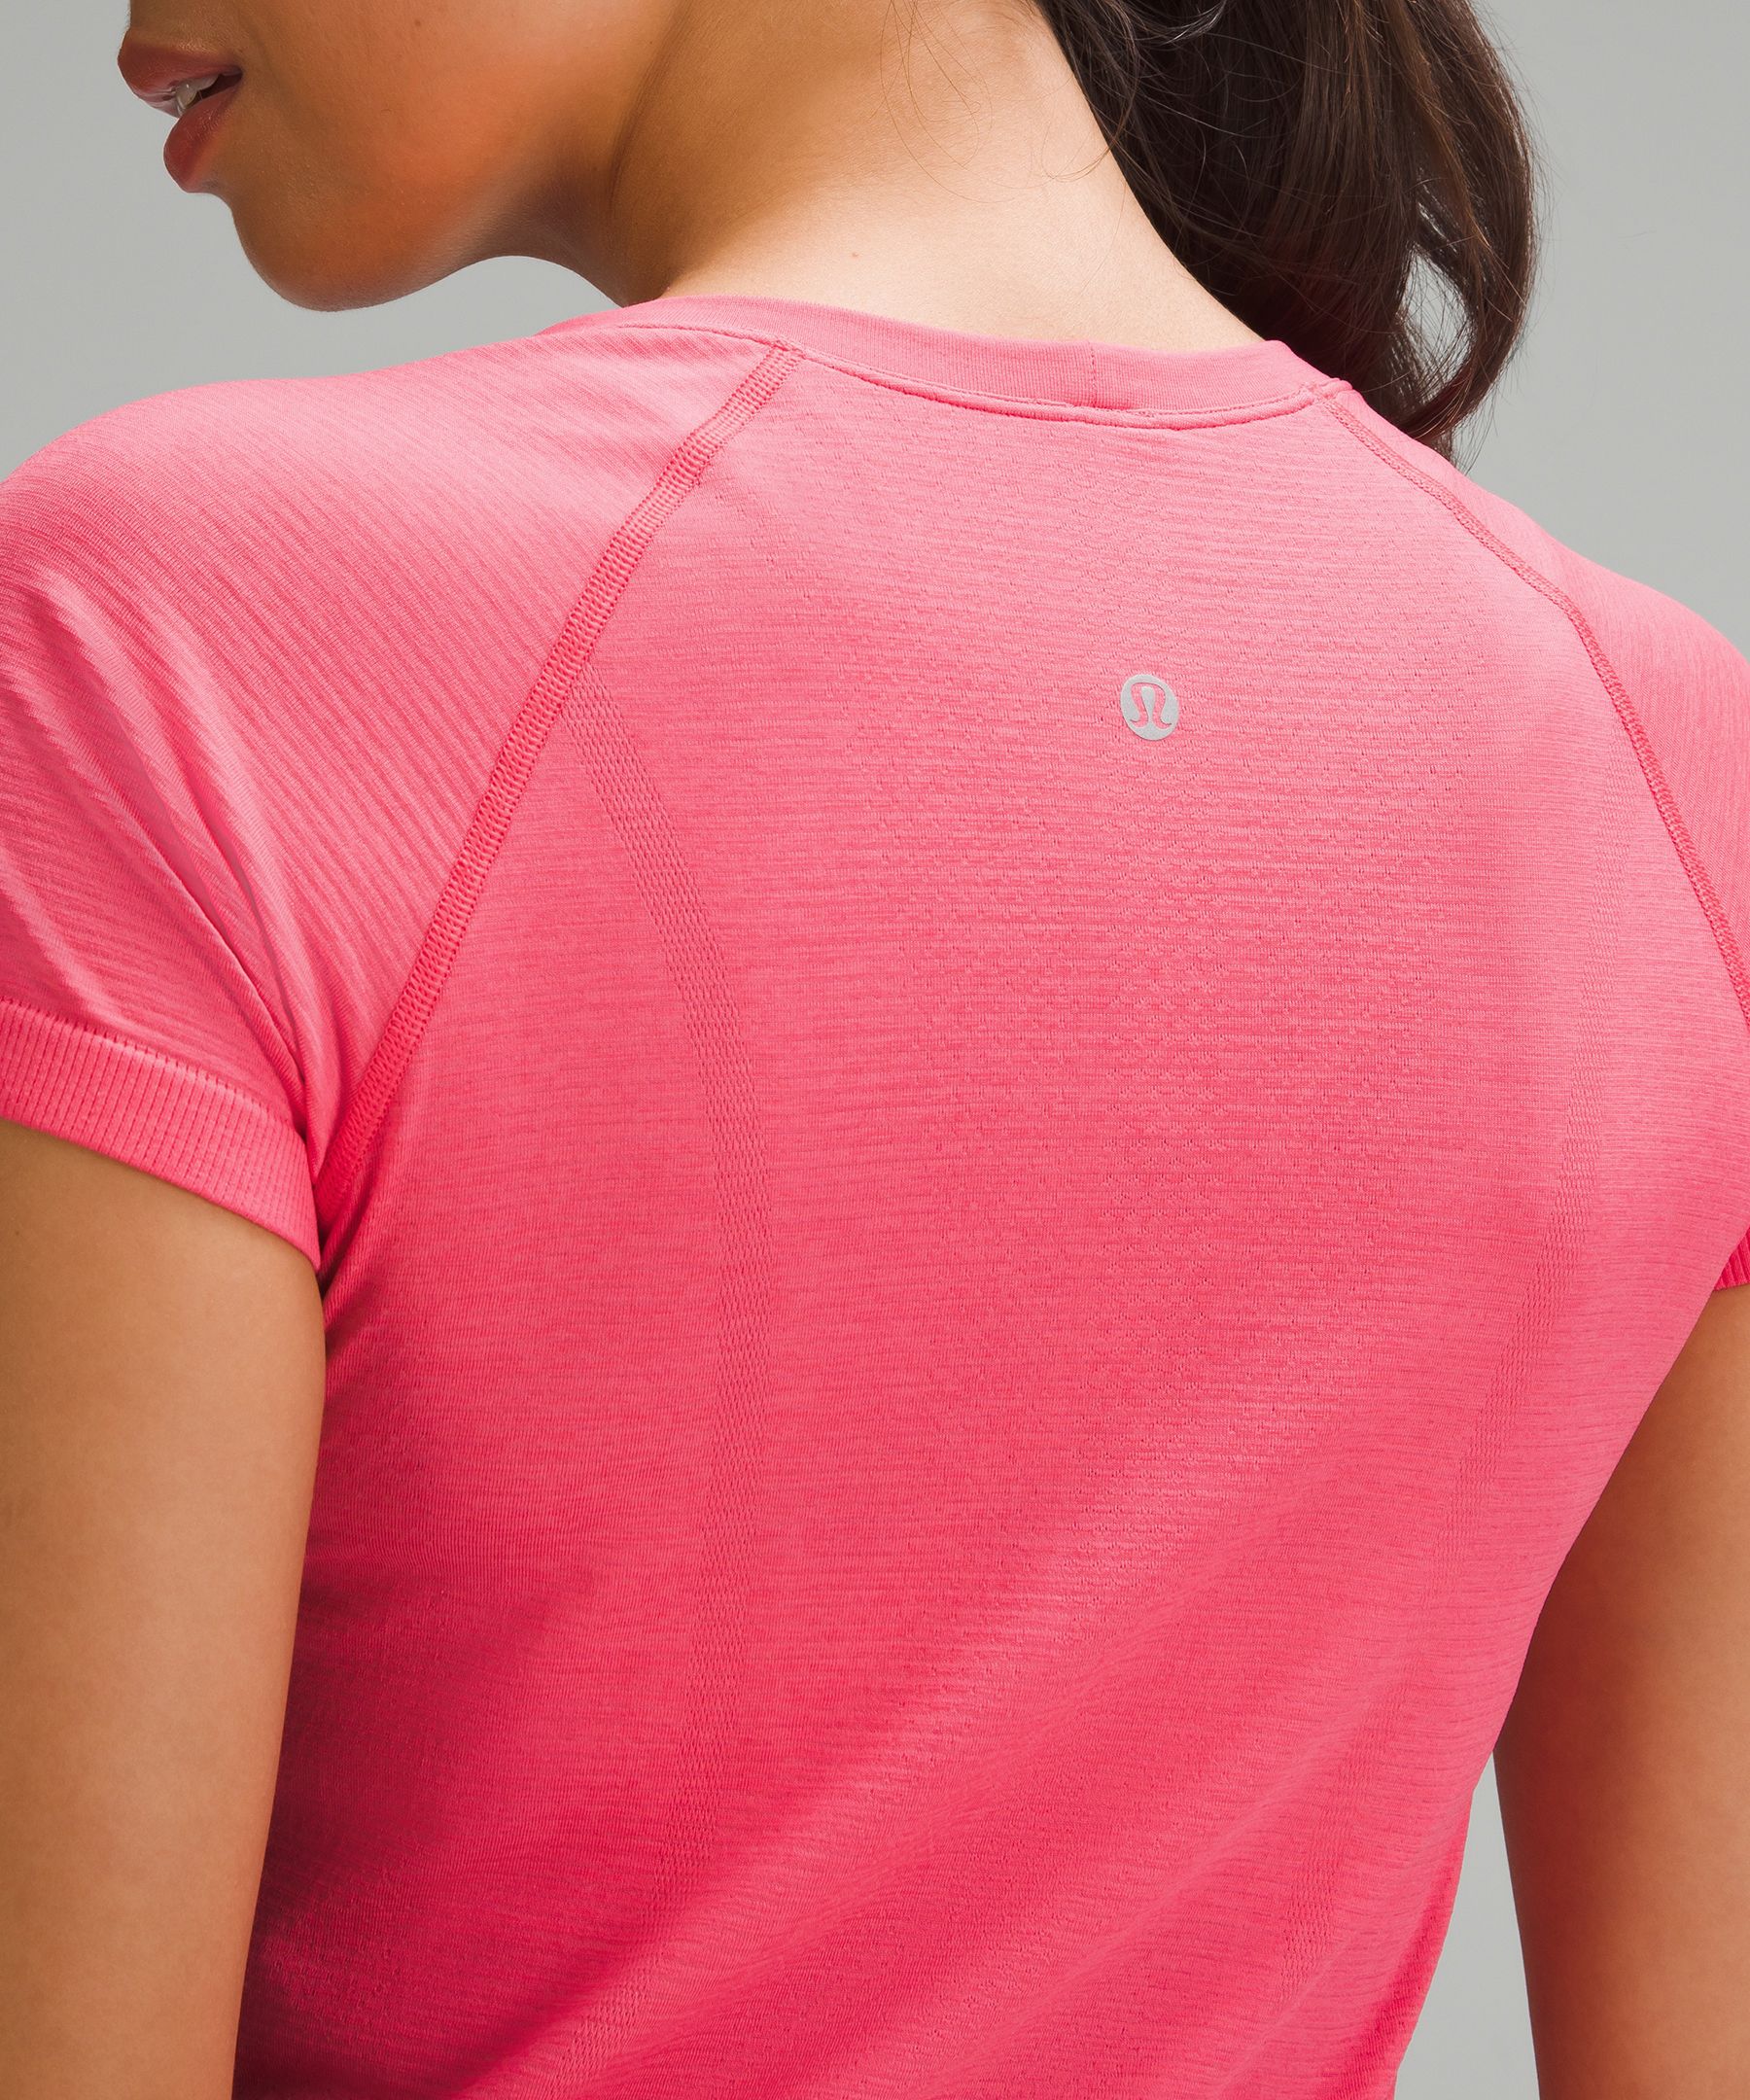 Swiftly Tech Short-Sleeve Shirt 2.0 | Women's Short Sleeve Shirts 